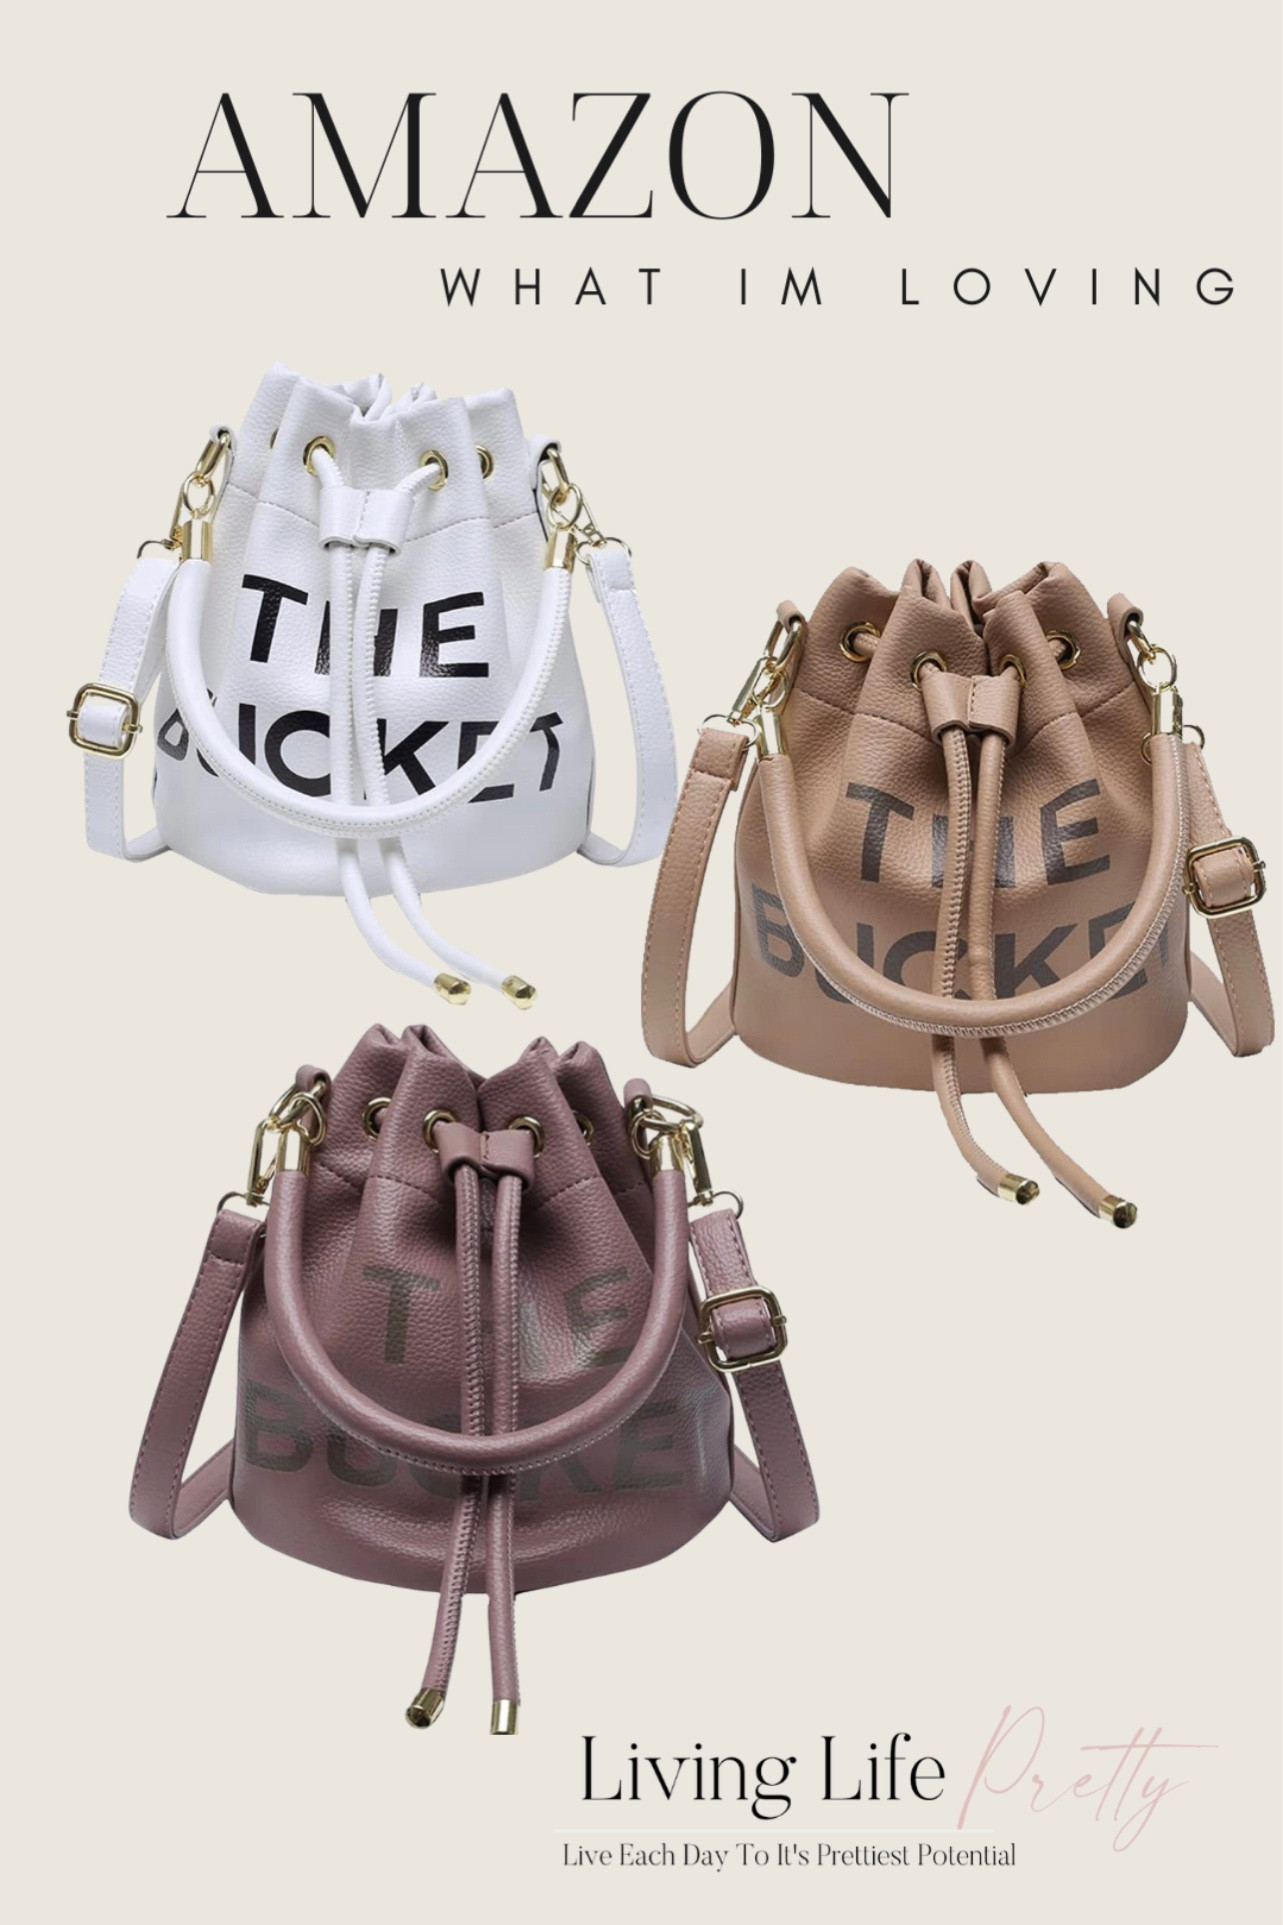 Fendi Mon Tresor Mini Bucket Bag curated on LTK